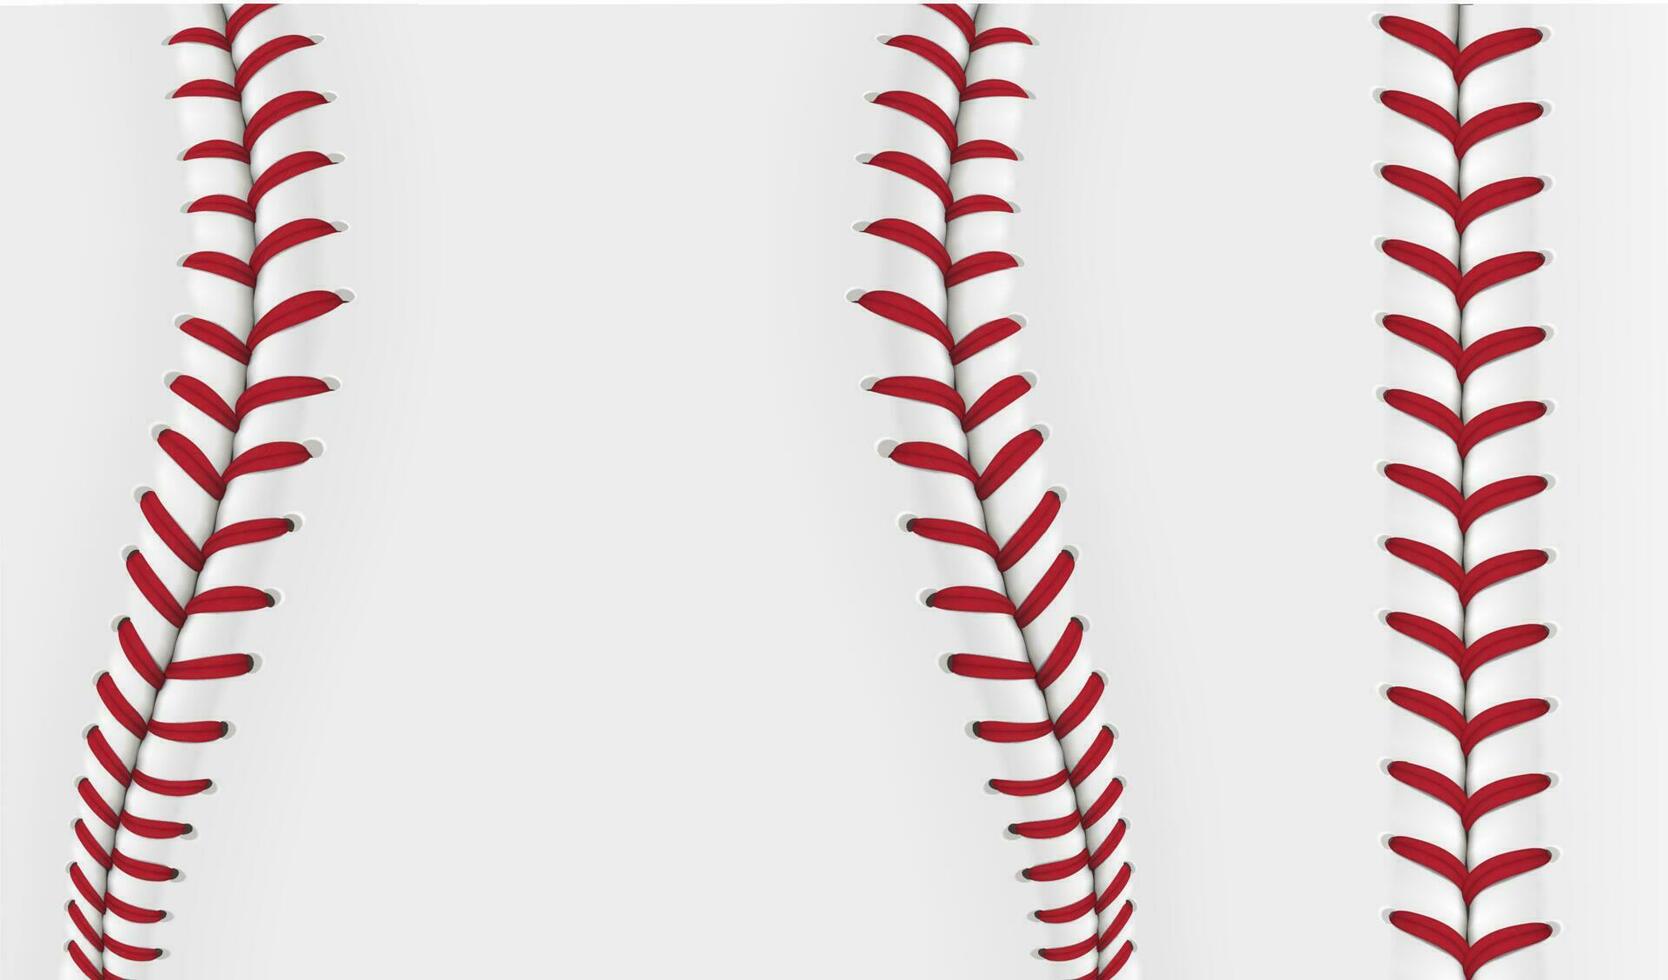 Baseball lace pattern, softball ball stitch thread vector